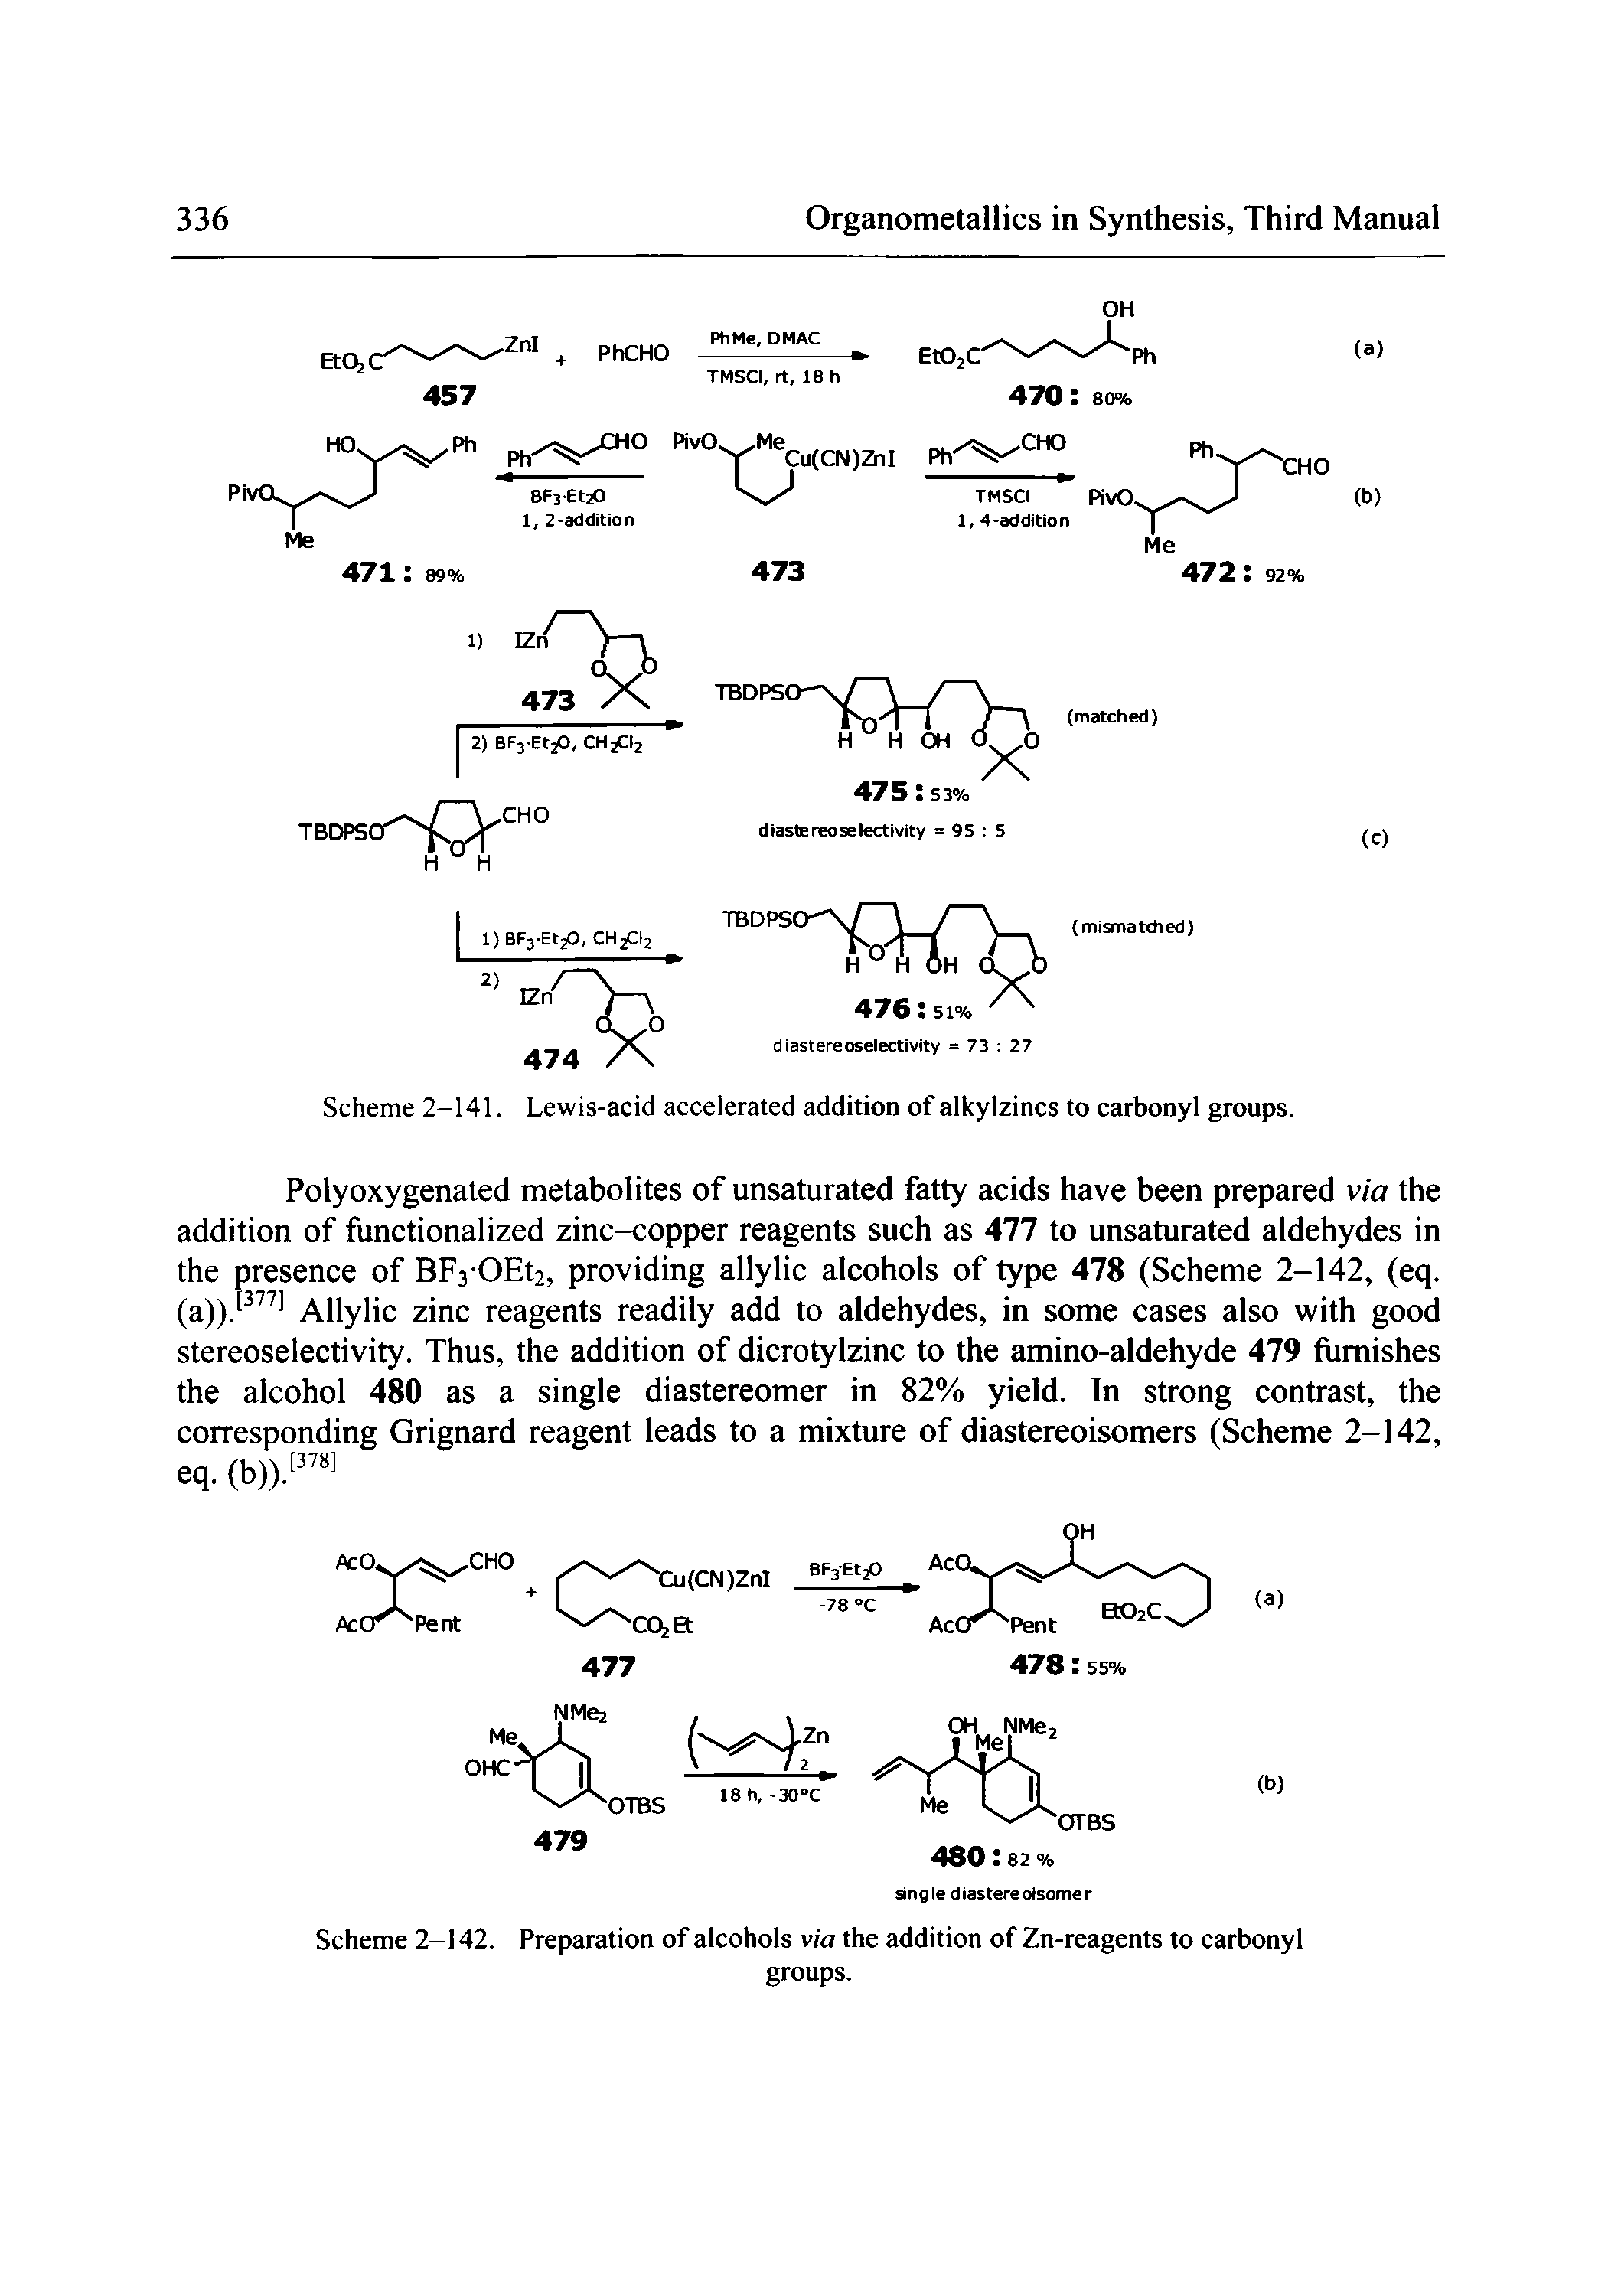 Scheme 2-141. Lewis-acid accelerated addition of alkylzincs to carbonyl groups.